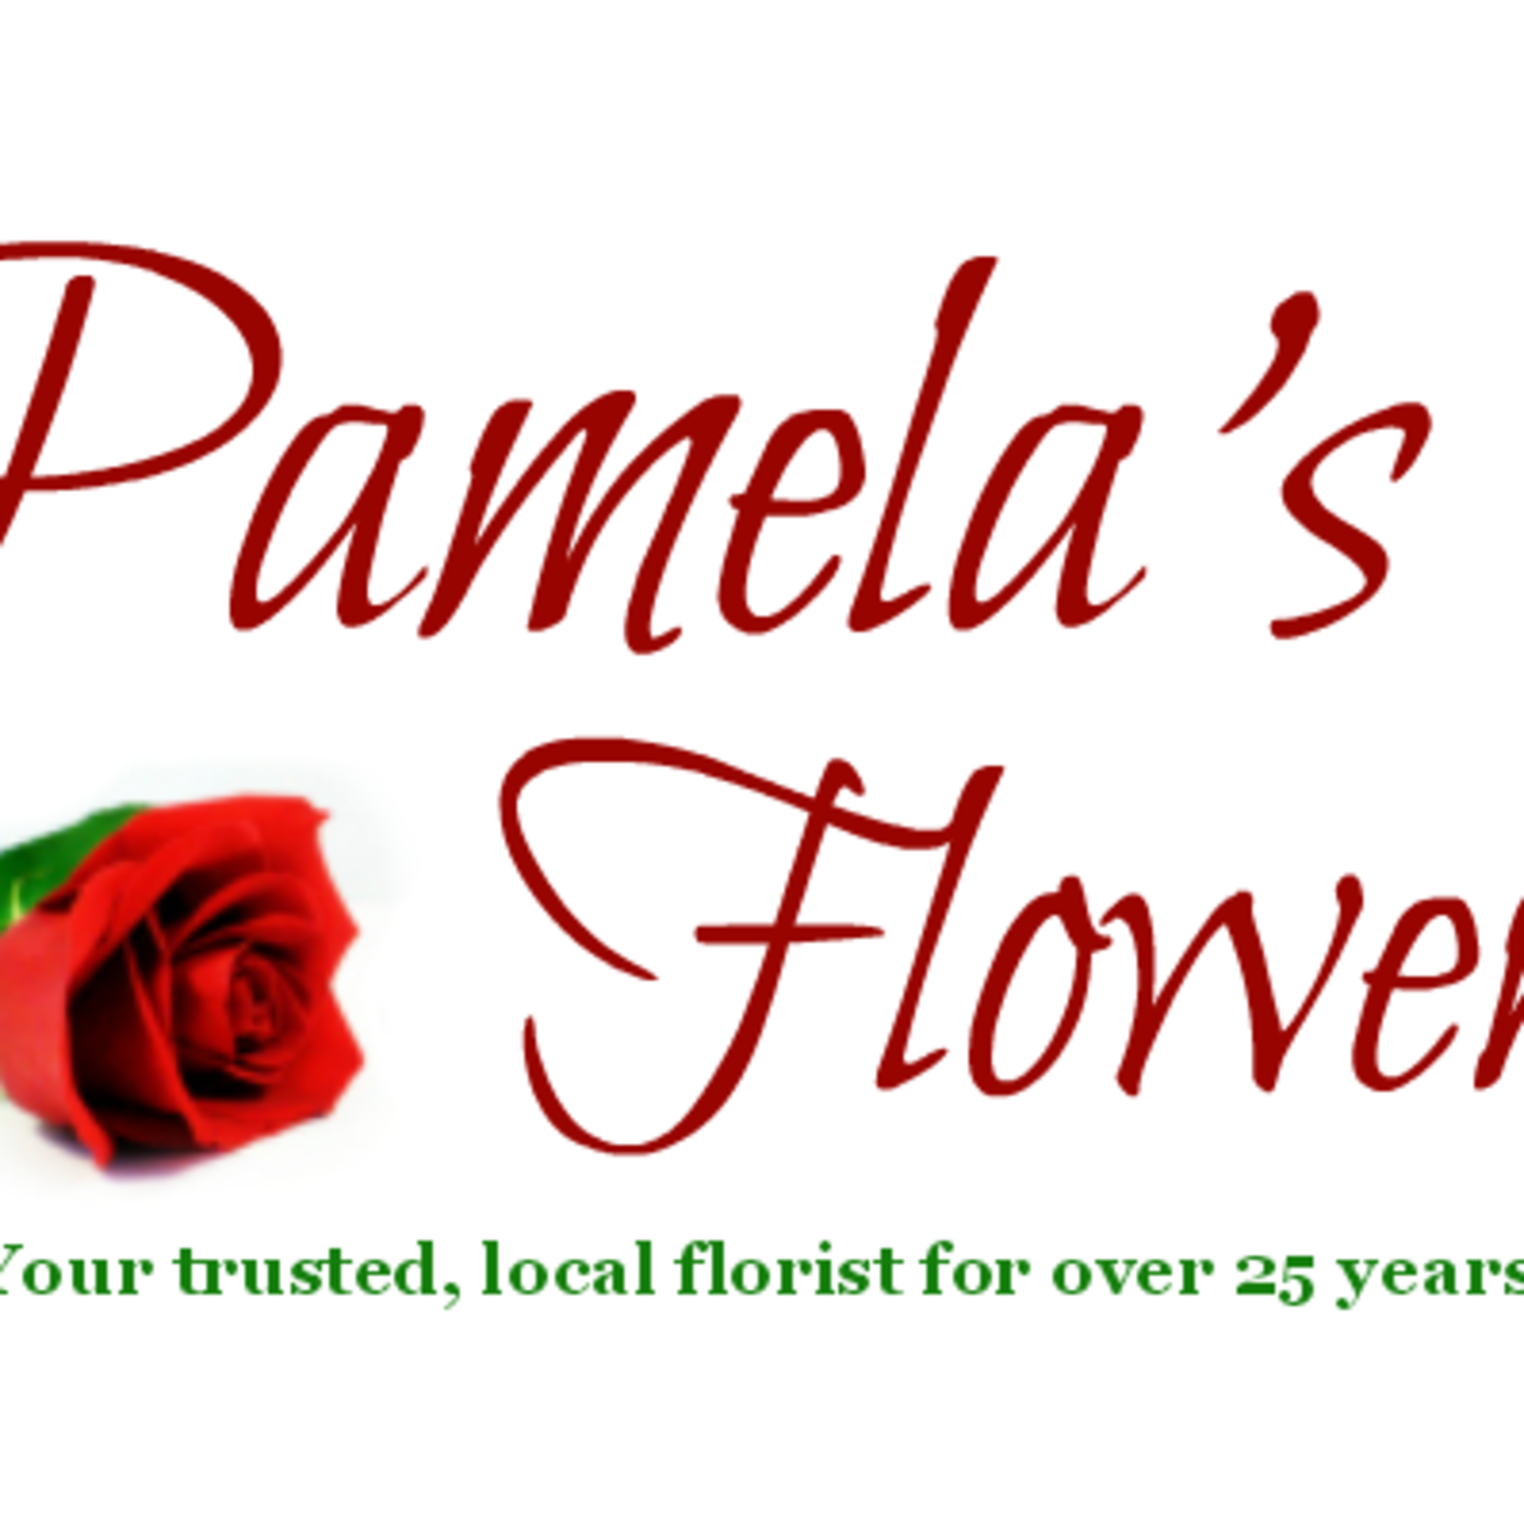 Pamela's Flowers